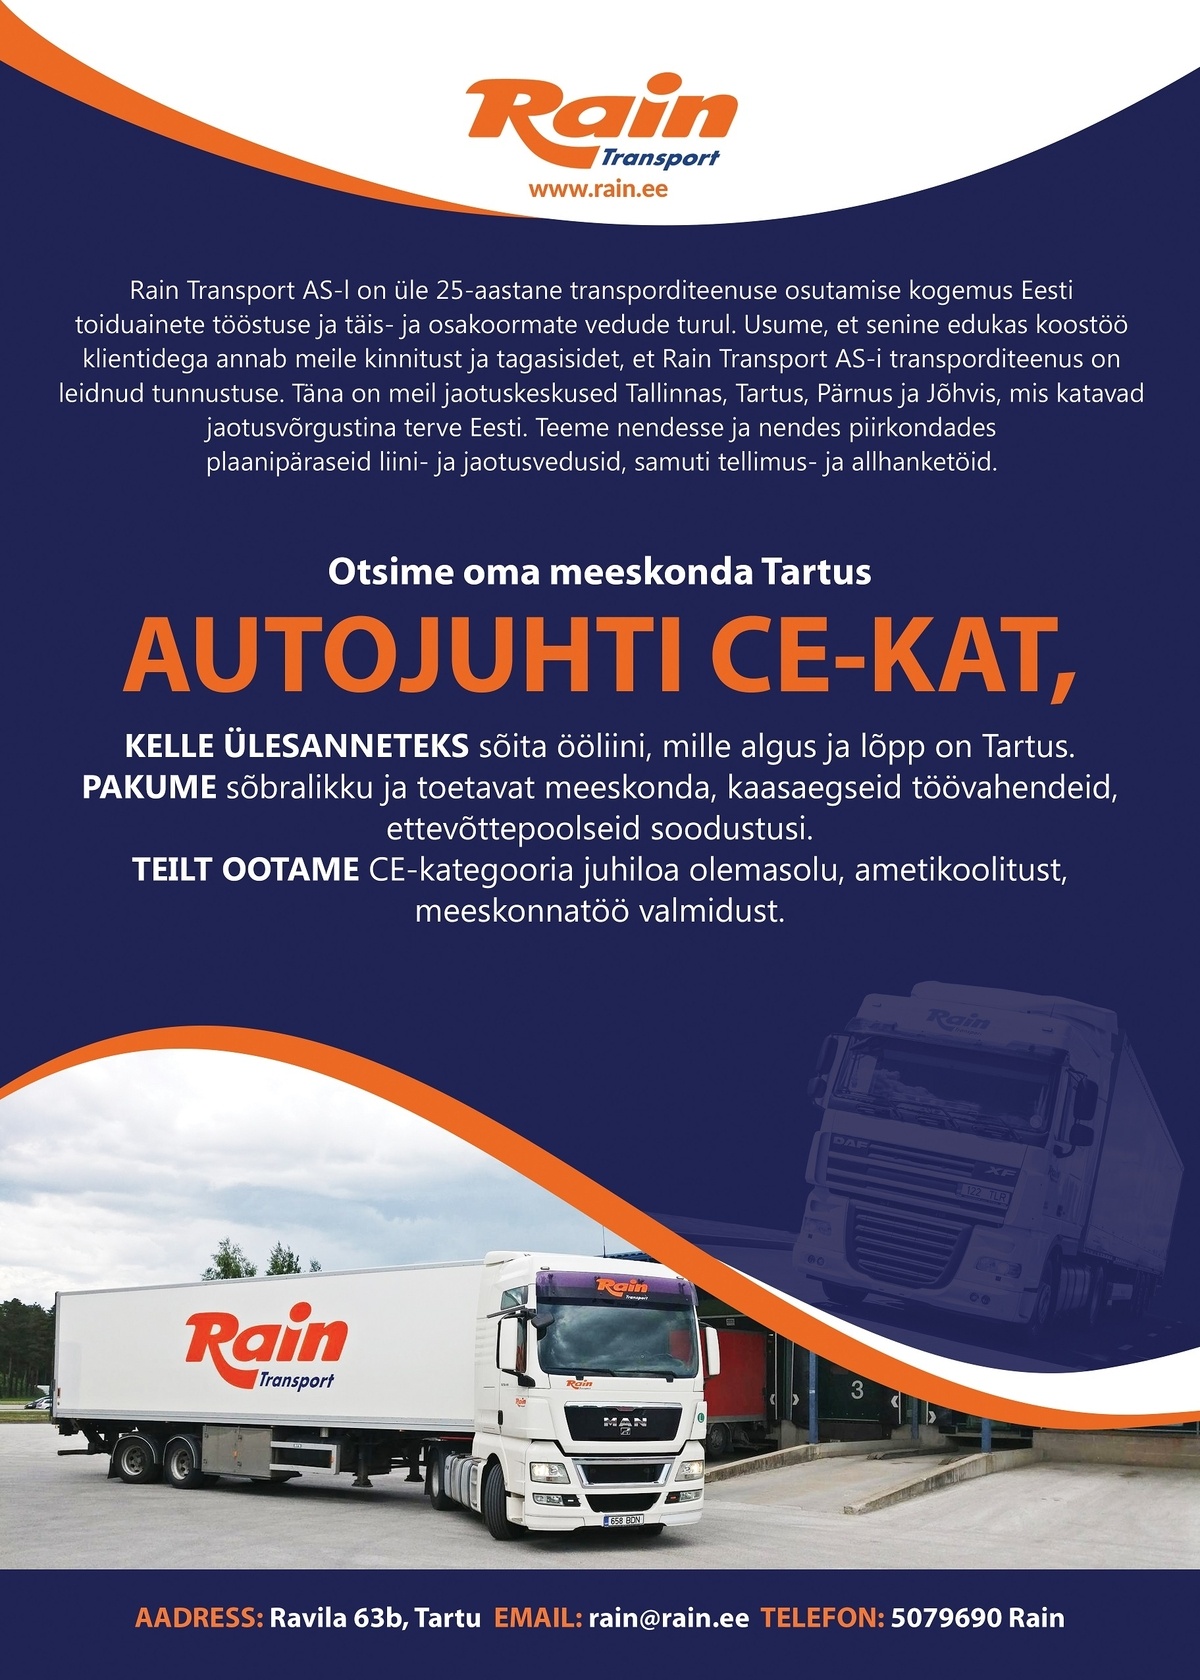 Rain Transport AS Autojuht CE-kat